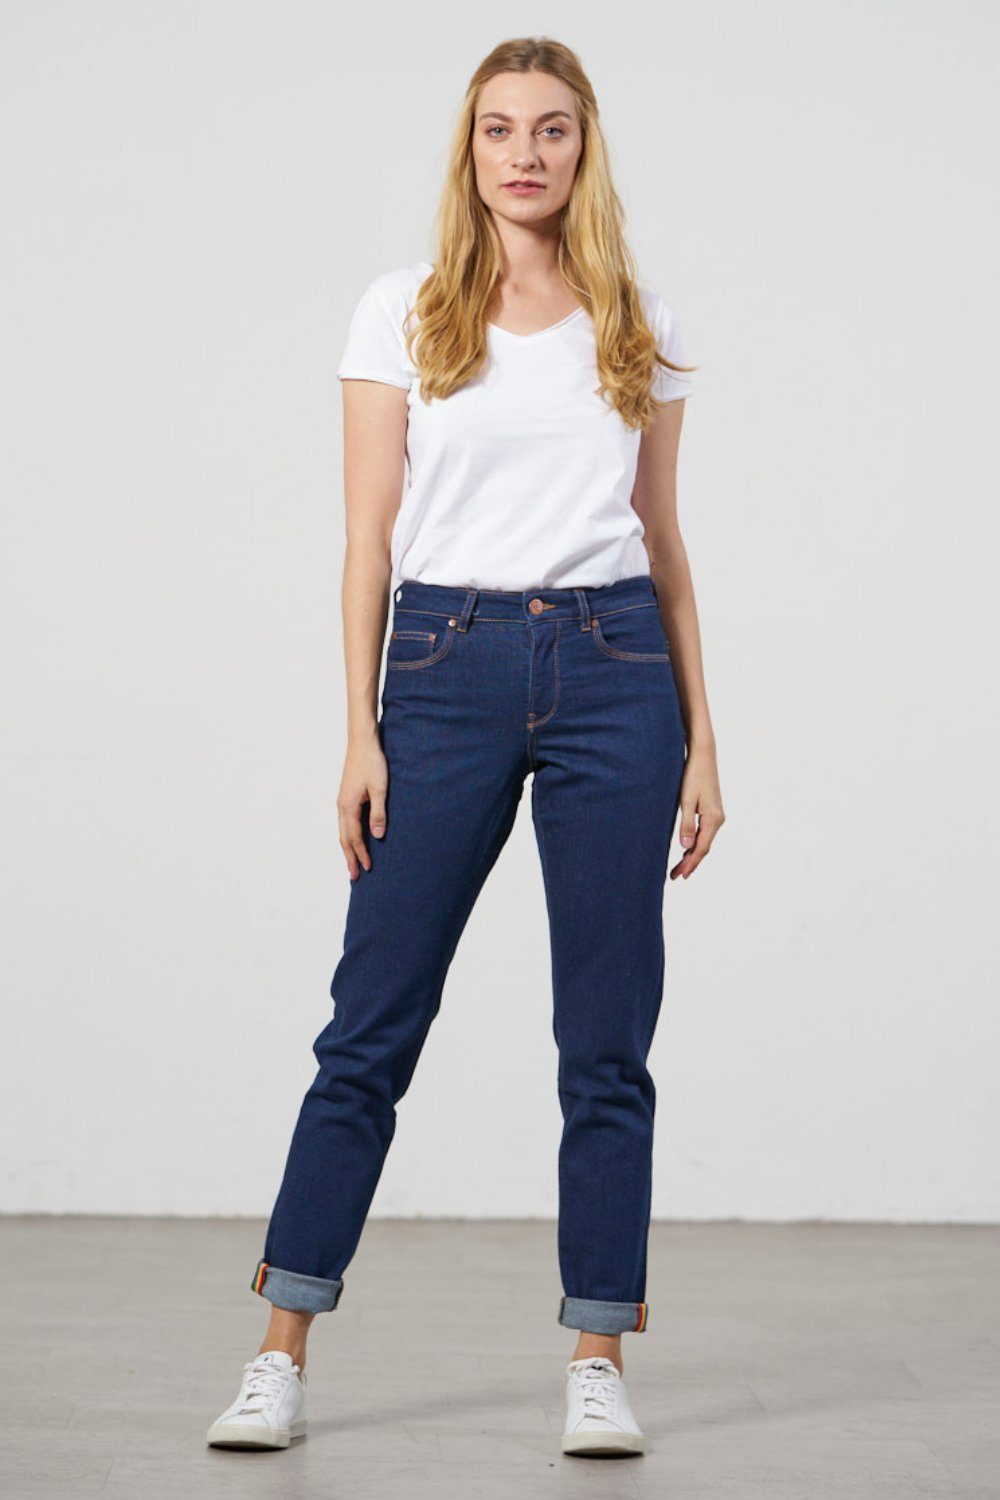 Feuervogl Slim-fit-Jeans fv-West:minster, Slim Fit, Medium Waist, Unisex Slim Fit, Unisex, 5-Pocket-Style, Medium Waist Classic Blue | Stretchjeans